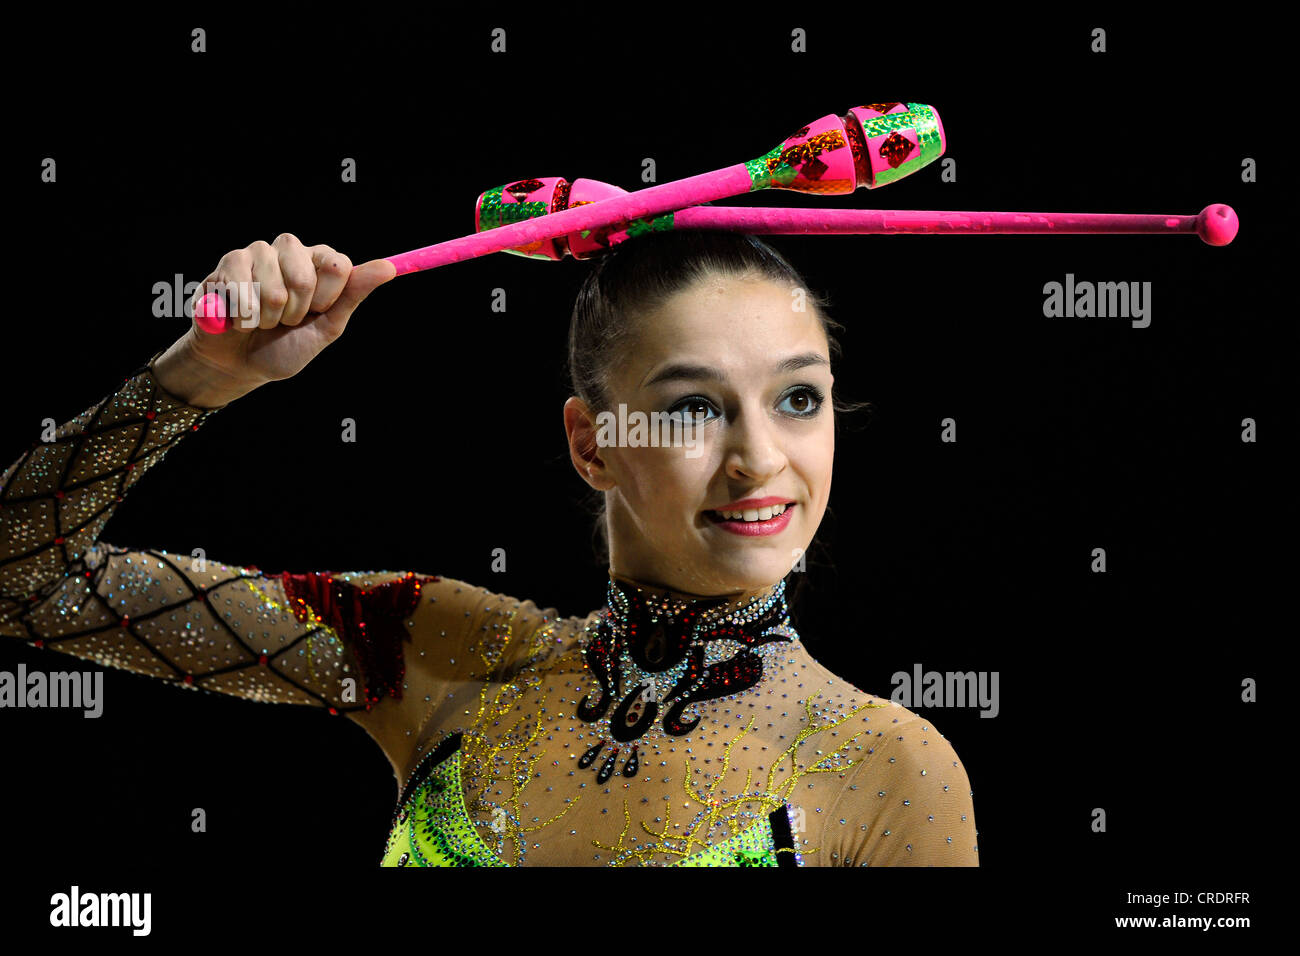 woman doing rhythmic gymnastics with claws Stock Photo